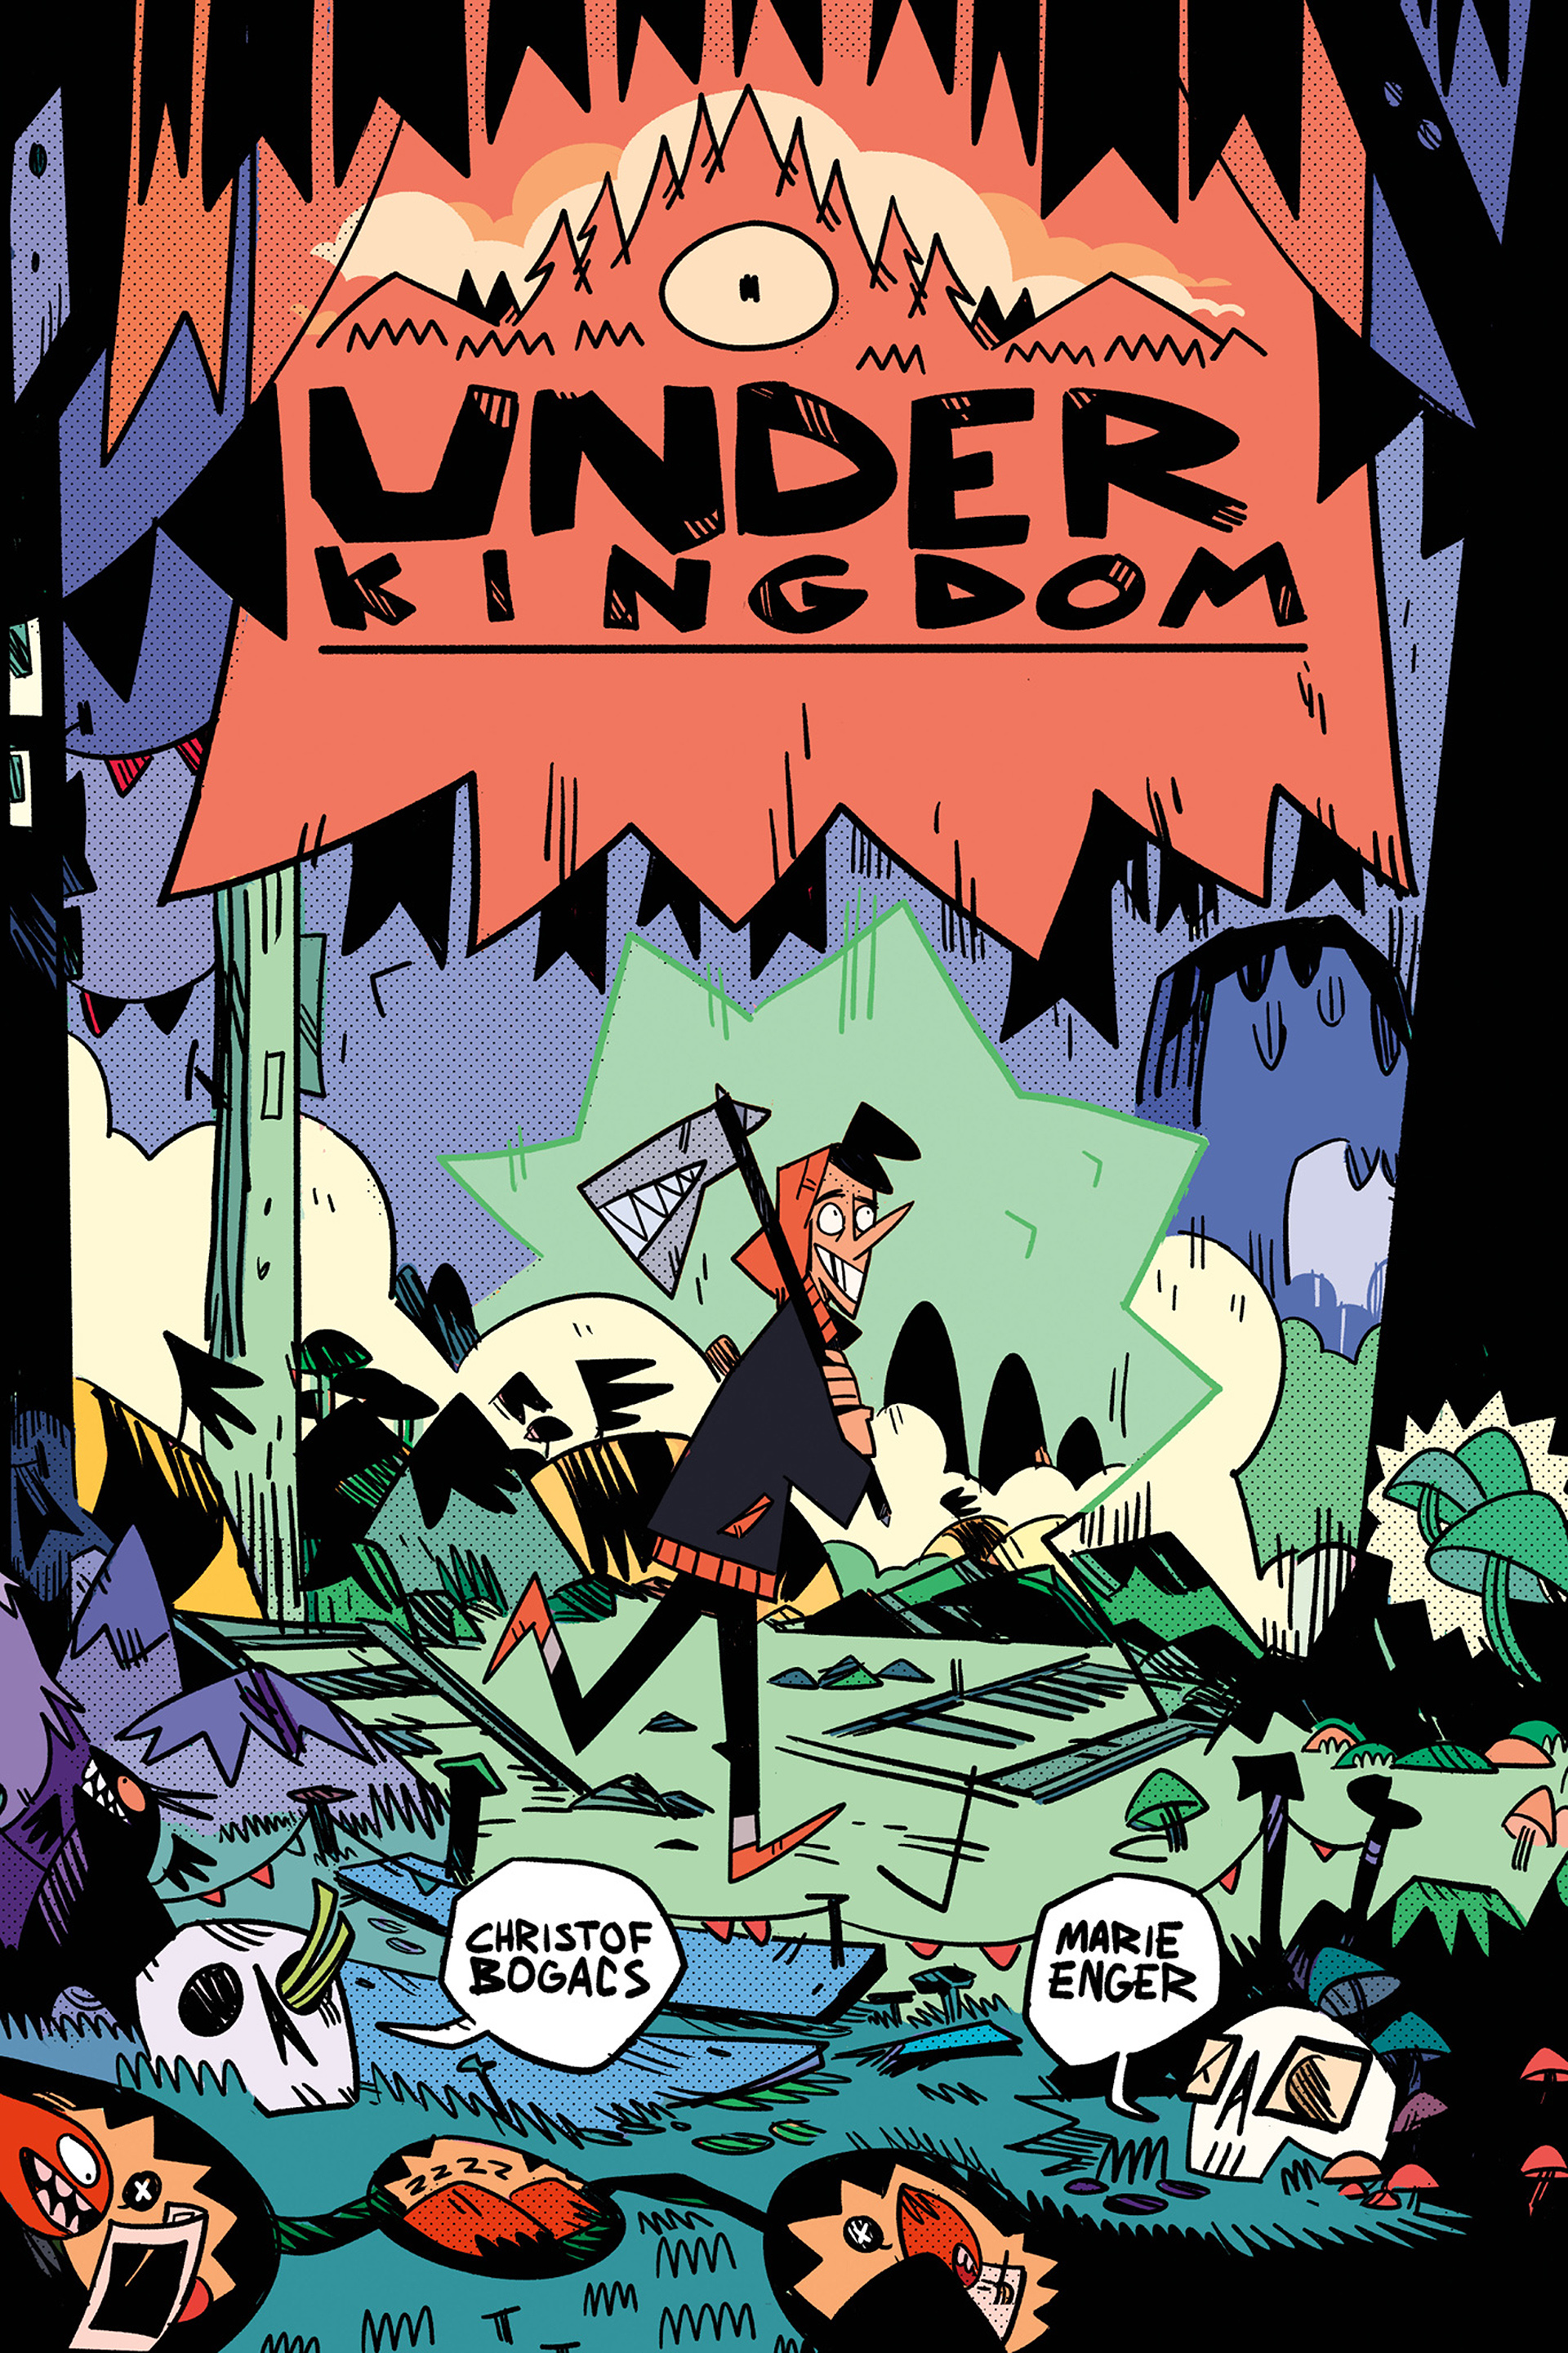 Read online Under Kingdom comic -  Issue # TPB - 1